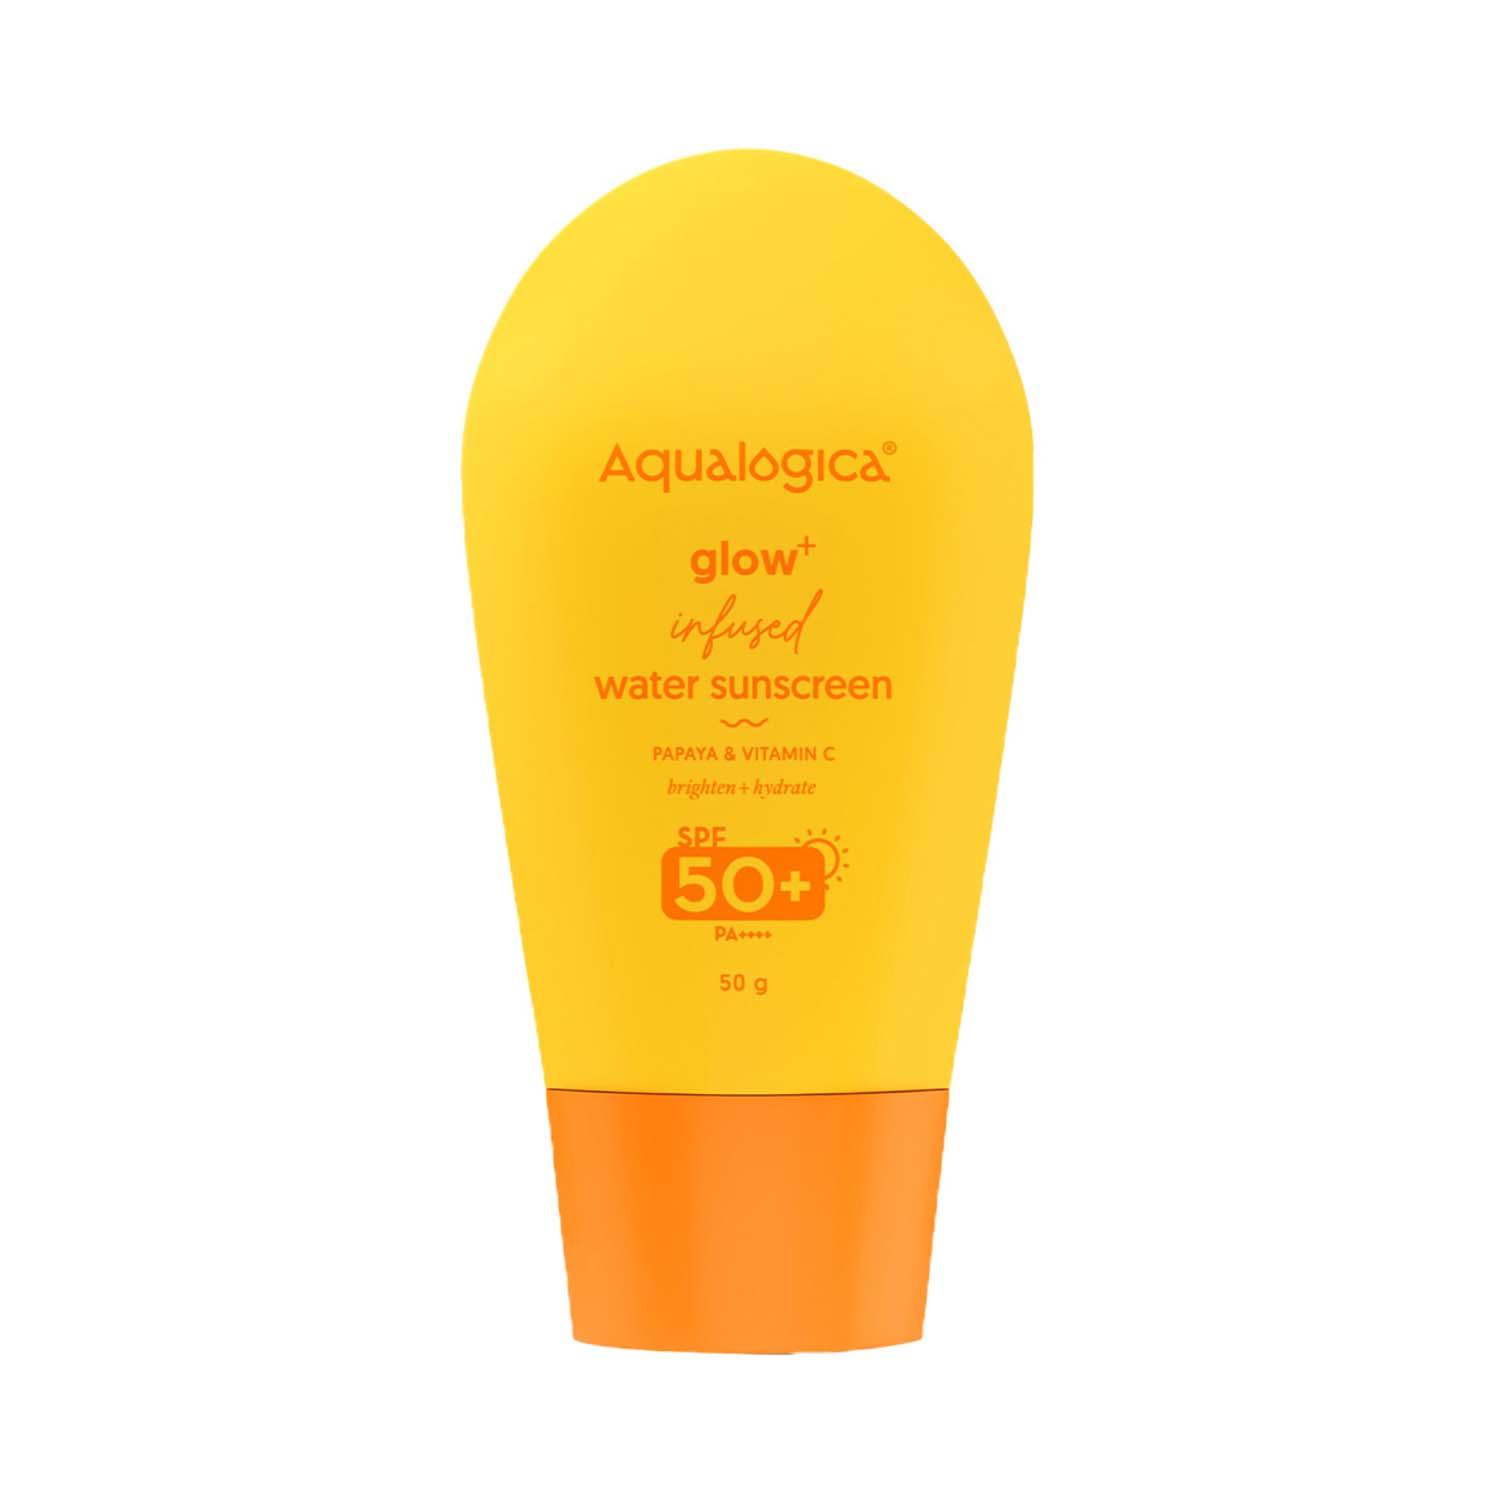 Aqualogica | Aqualogica Glow+ Infused Water Sunscreen With SPF 50+ PA++++ (50 g)